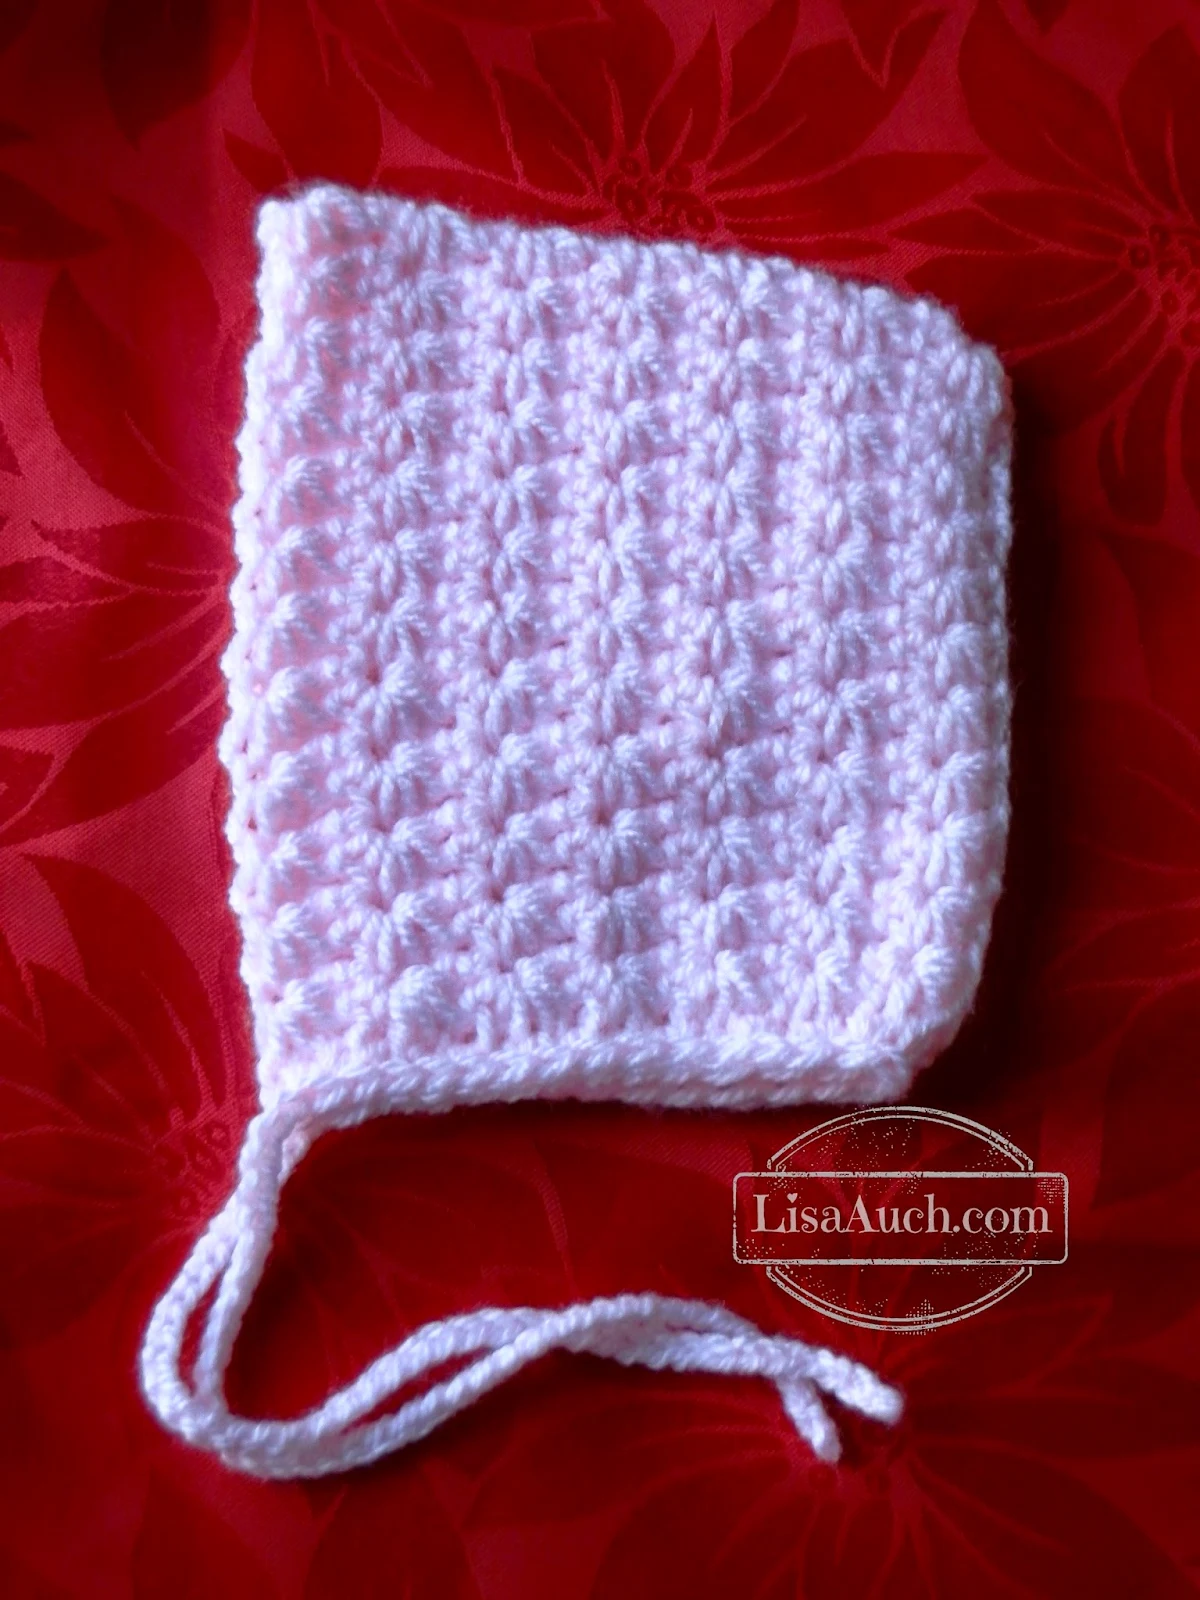 Free Crochet patterns for baby bonnet, star stitch baby bonnet